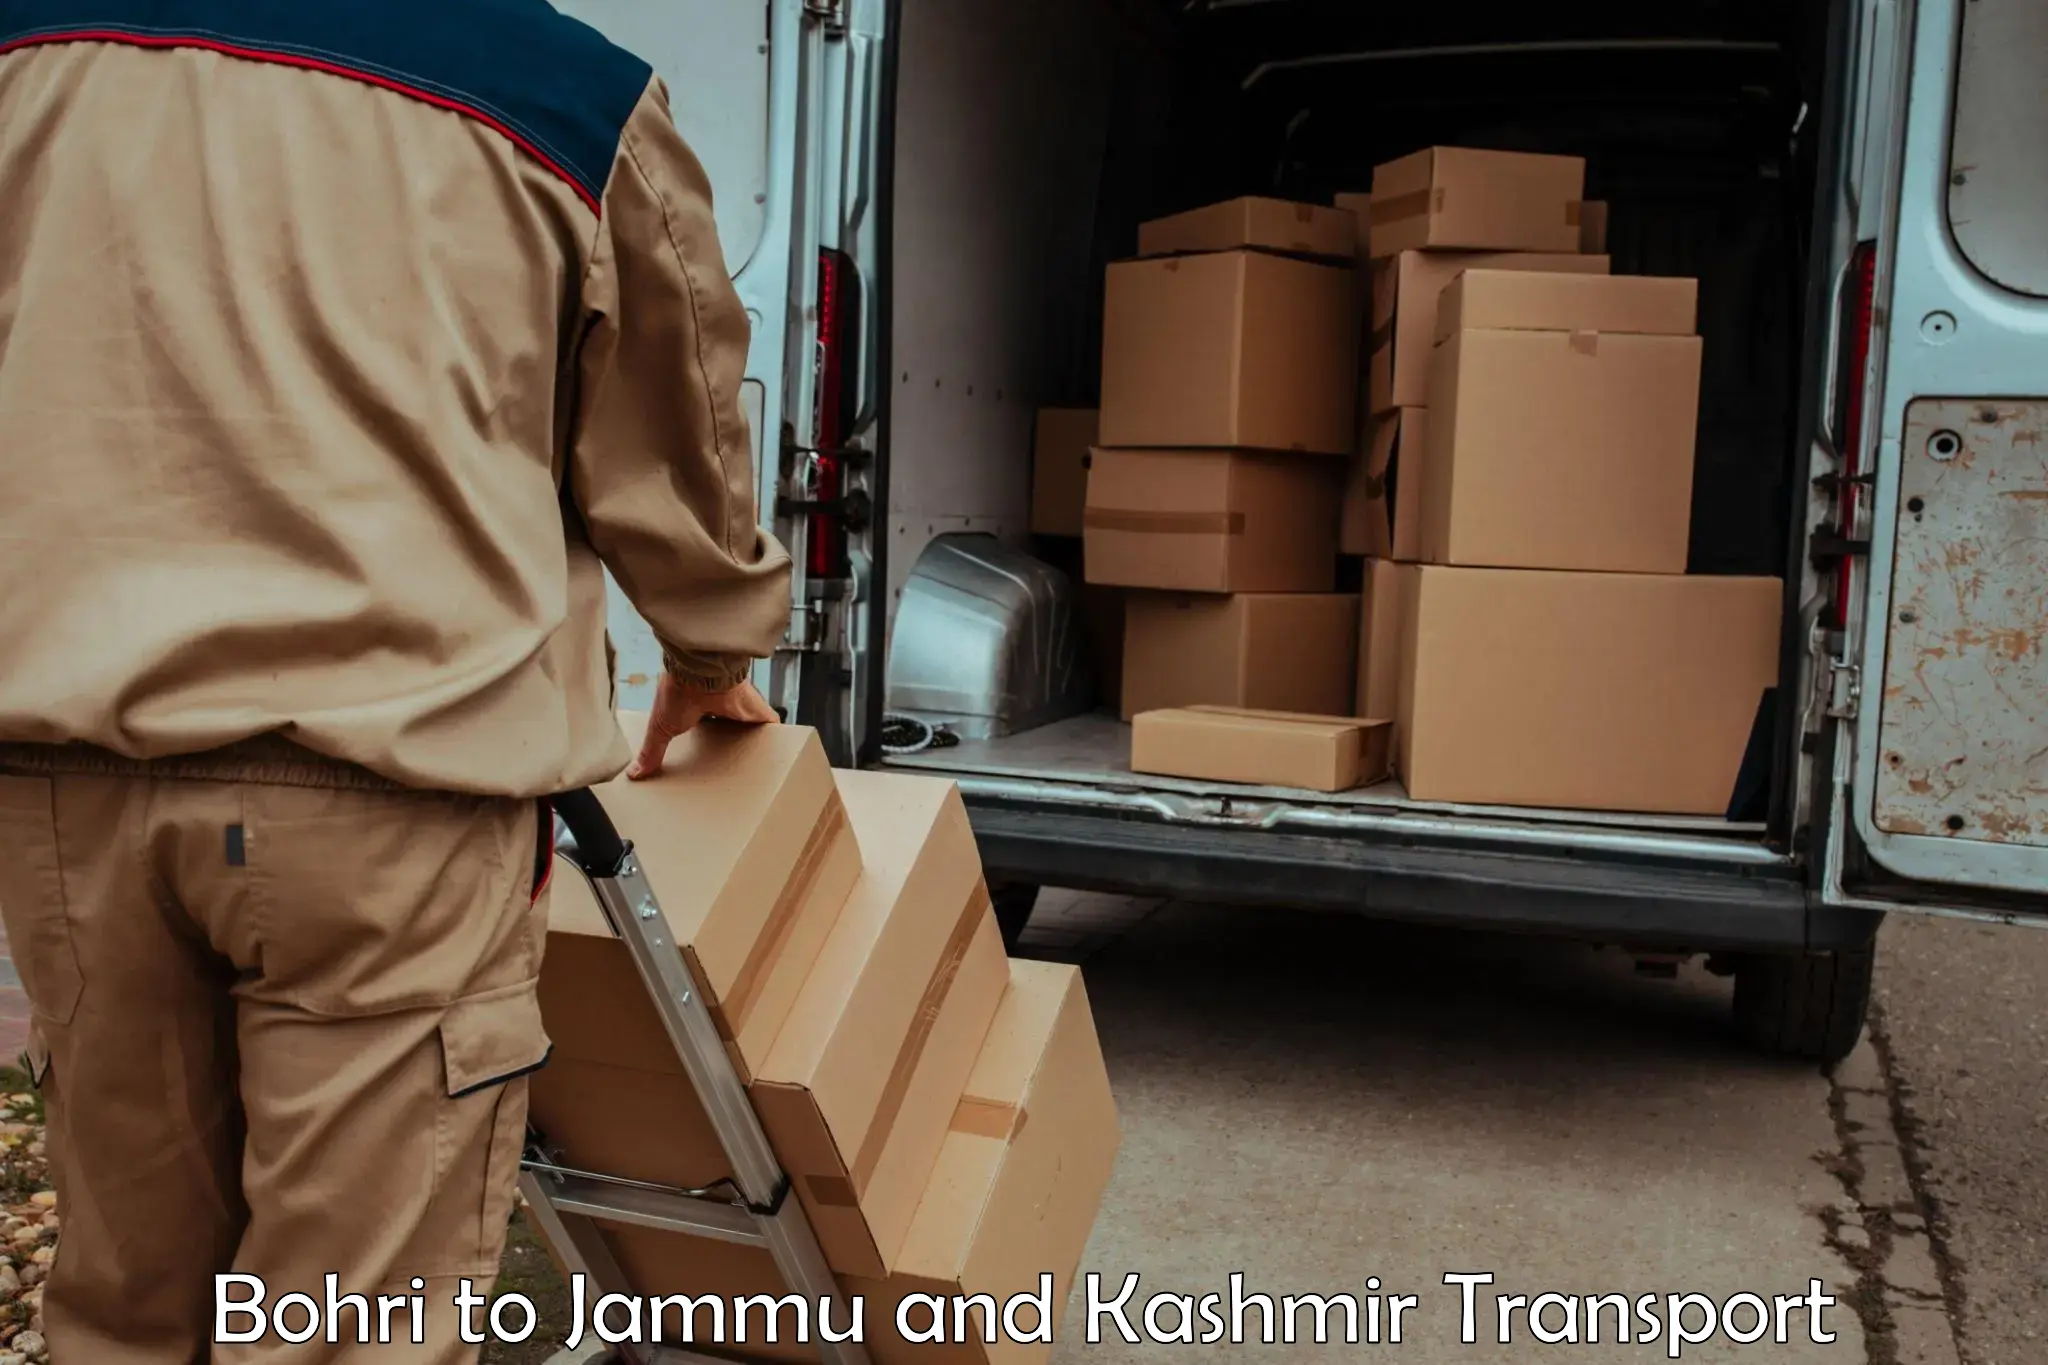 Truck transport companies in India Bohri to Shopian